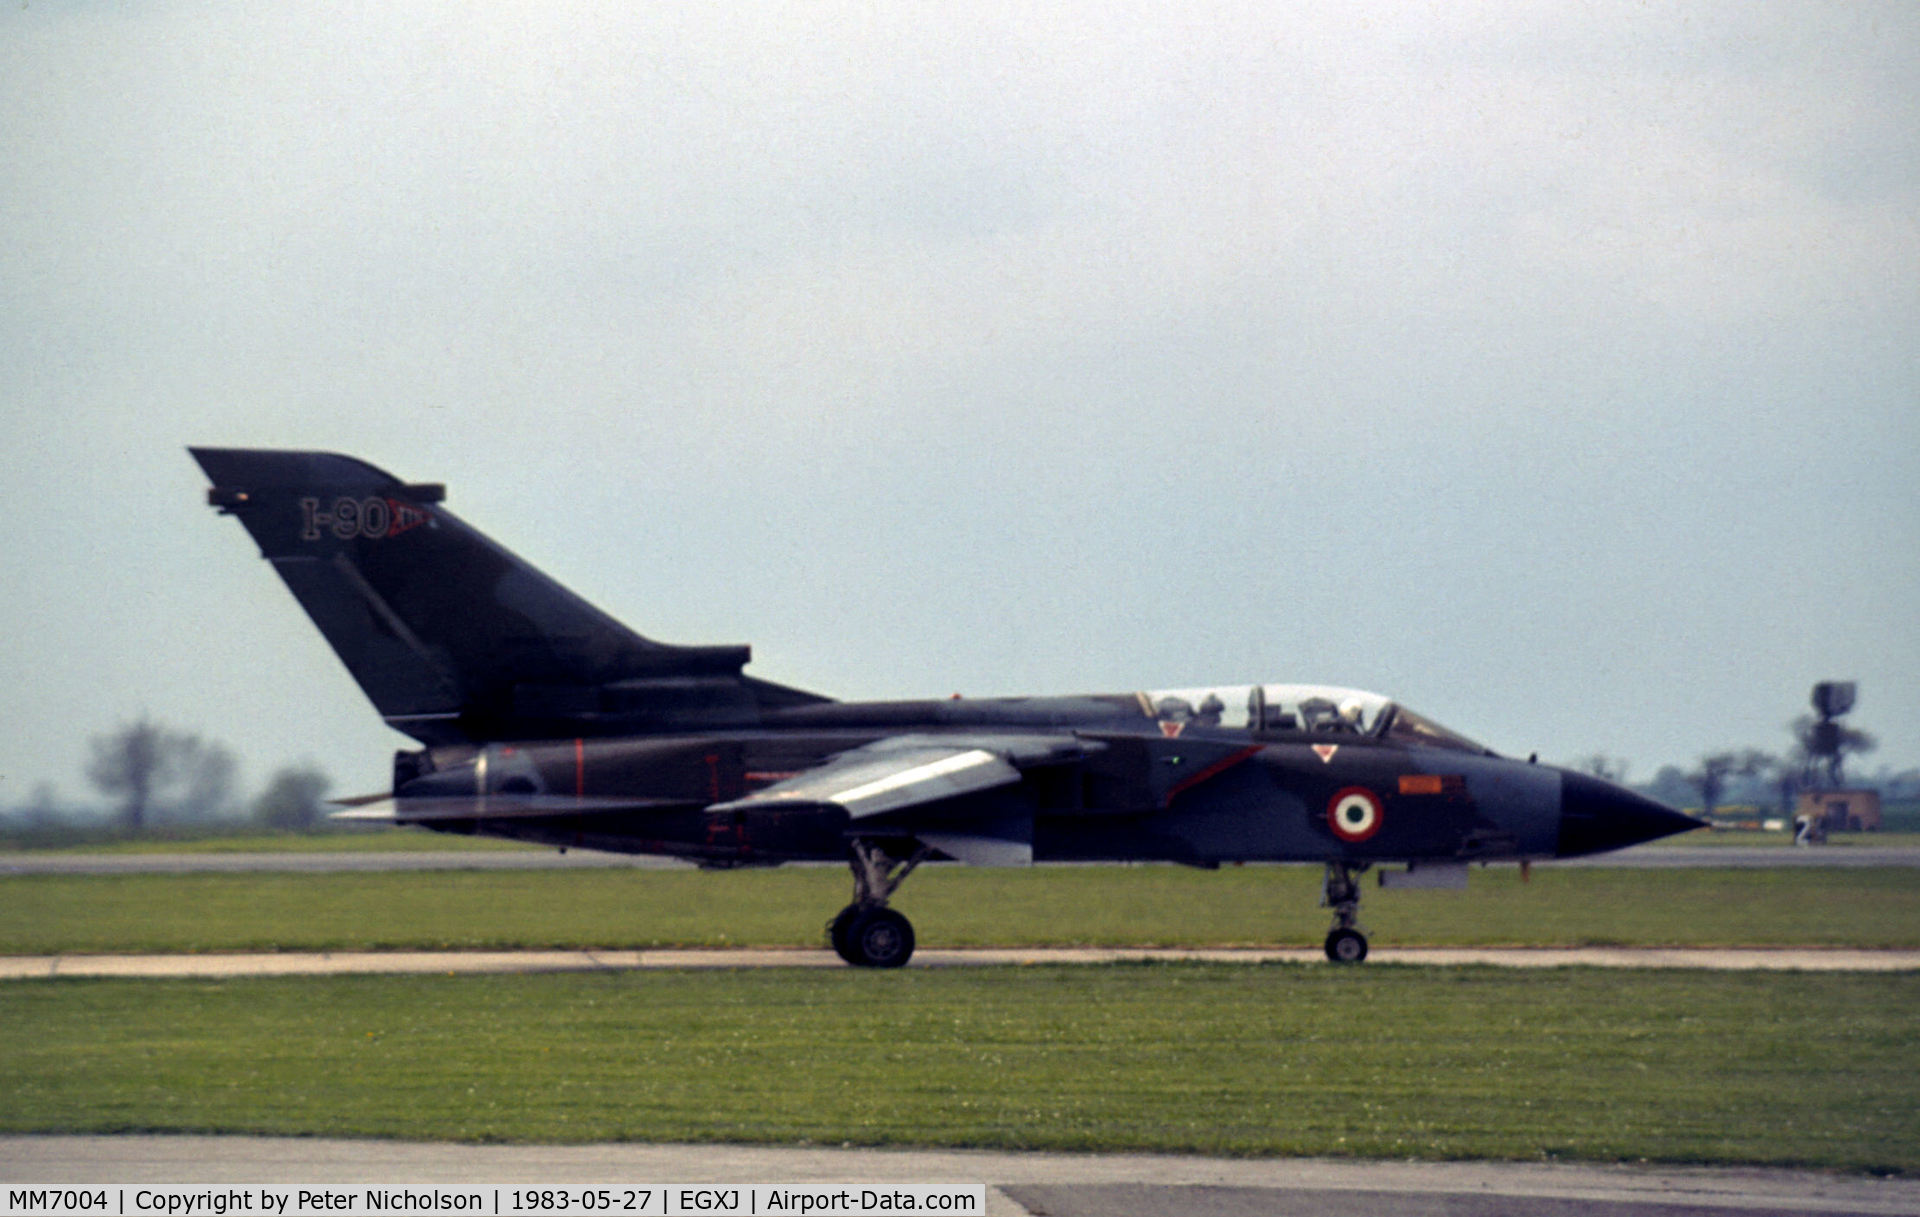 MM7004, Panavia Tornado IDS C/N 086/IS003/5006, Italian Air Force Tornado IDS of the Tri-National Tornado Training Establishment (TTTE) at RAF Cottesmore in May 1983.